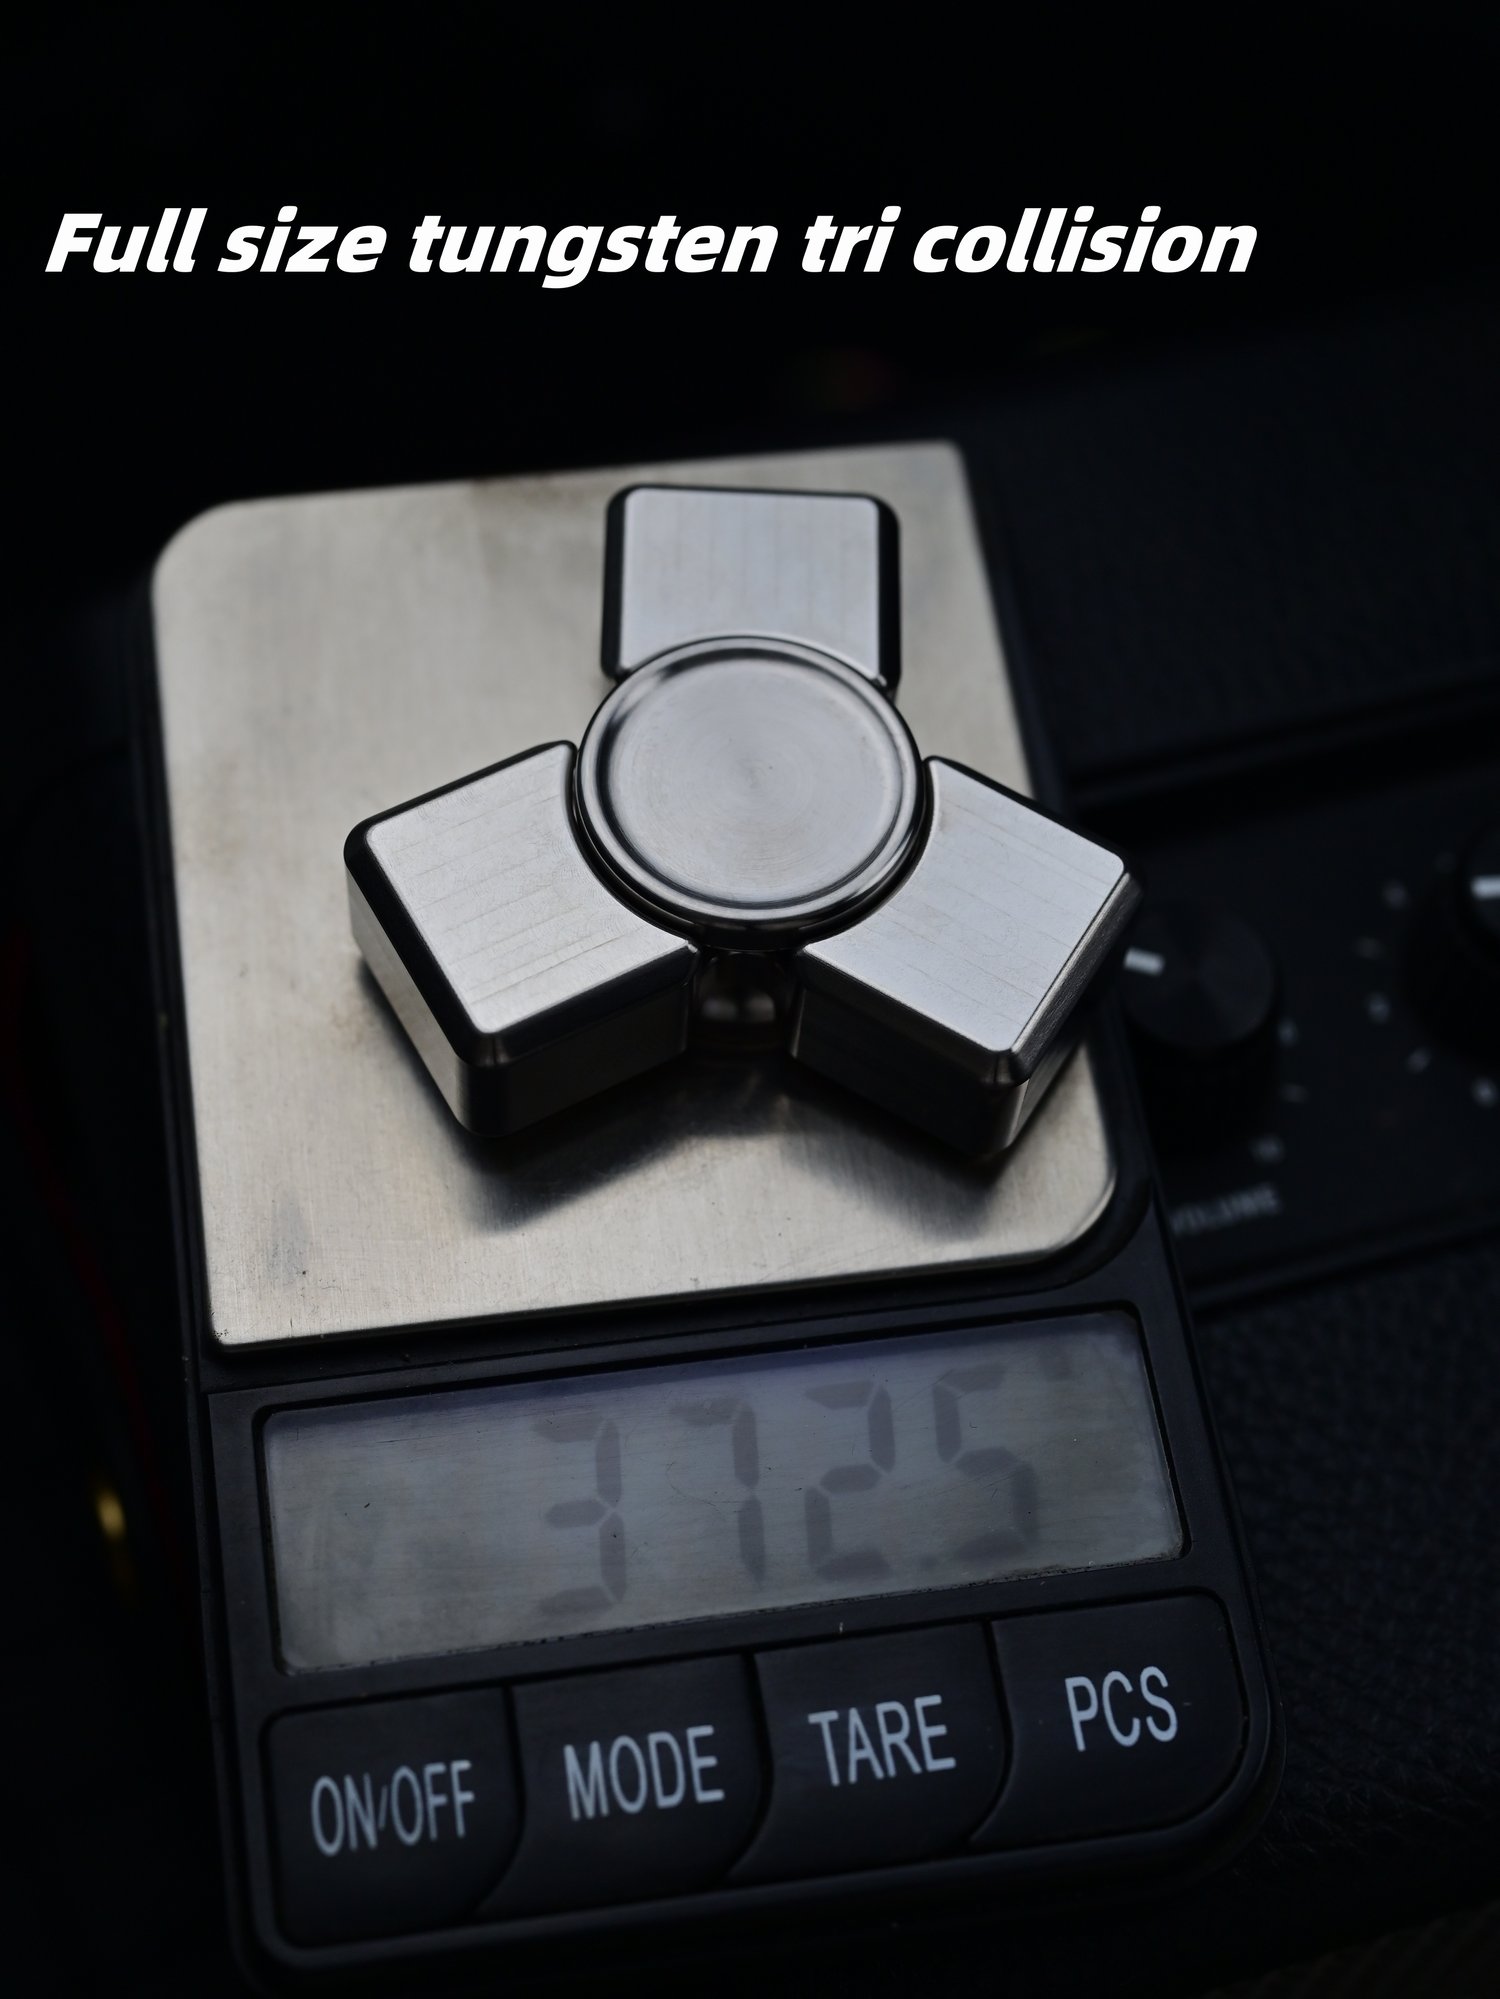 Image of Tungsten Full-size tri collision fidget spinner 